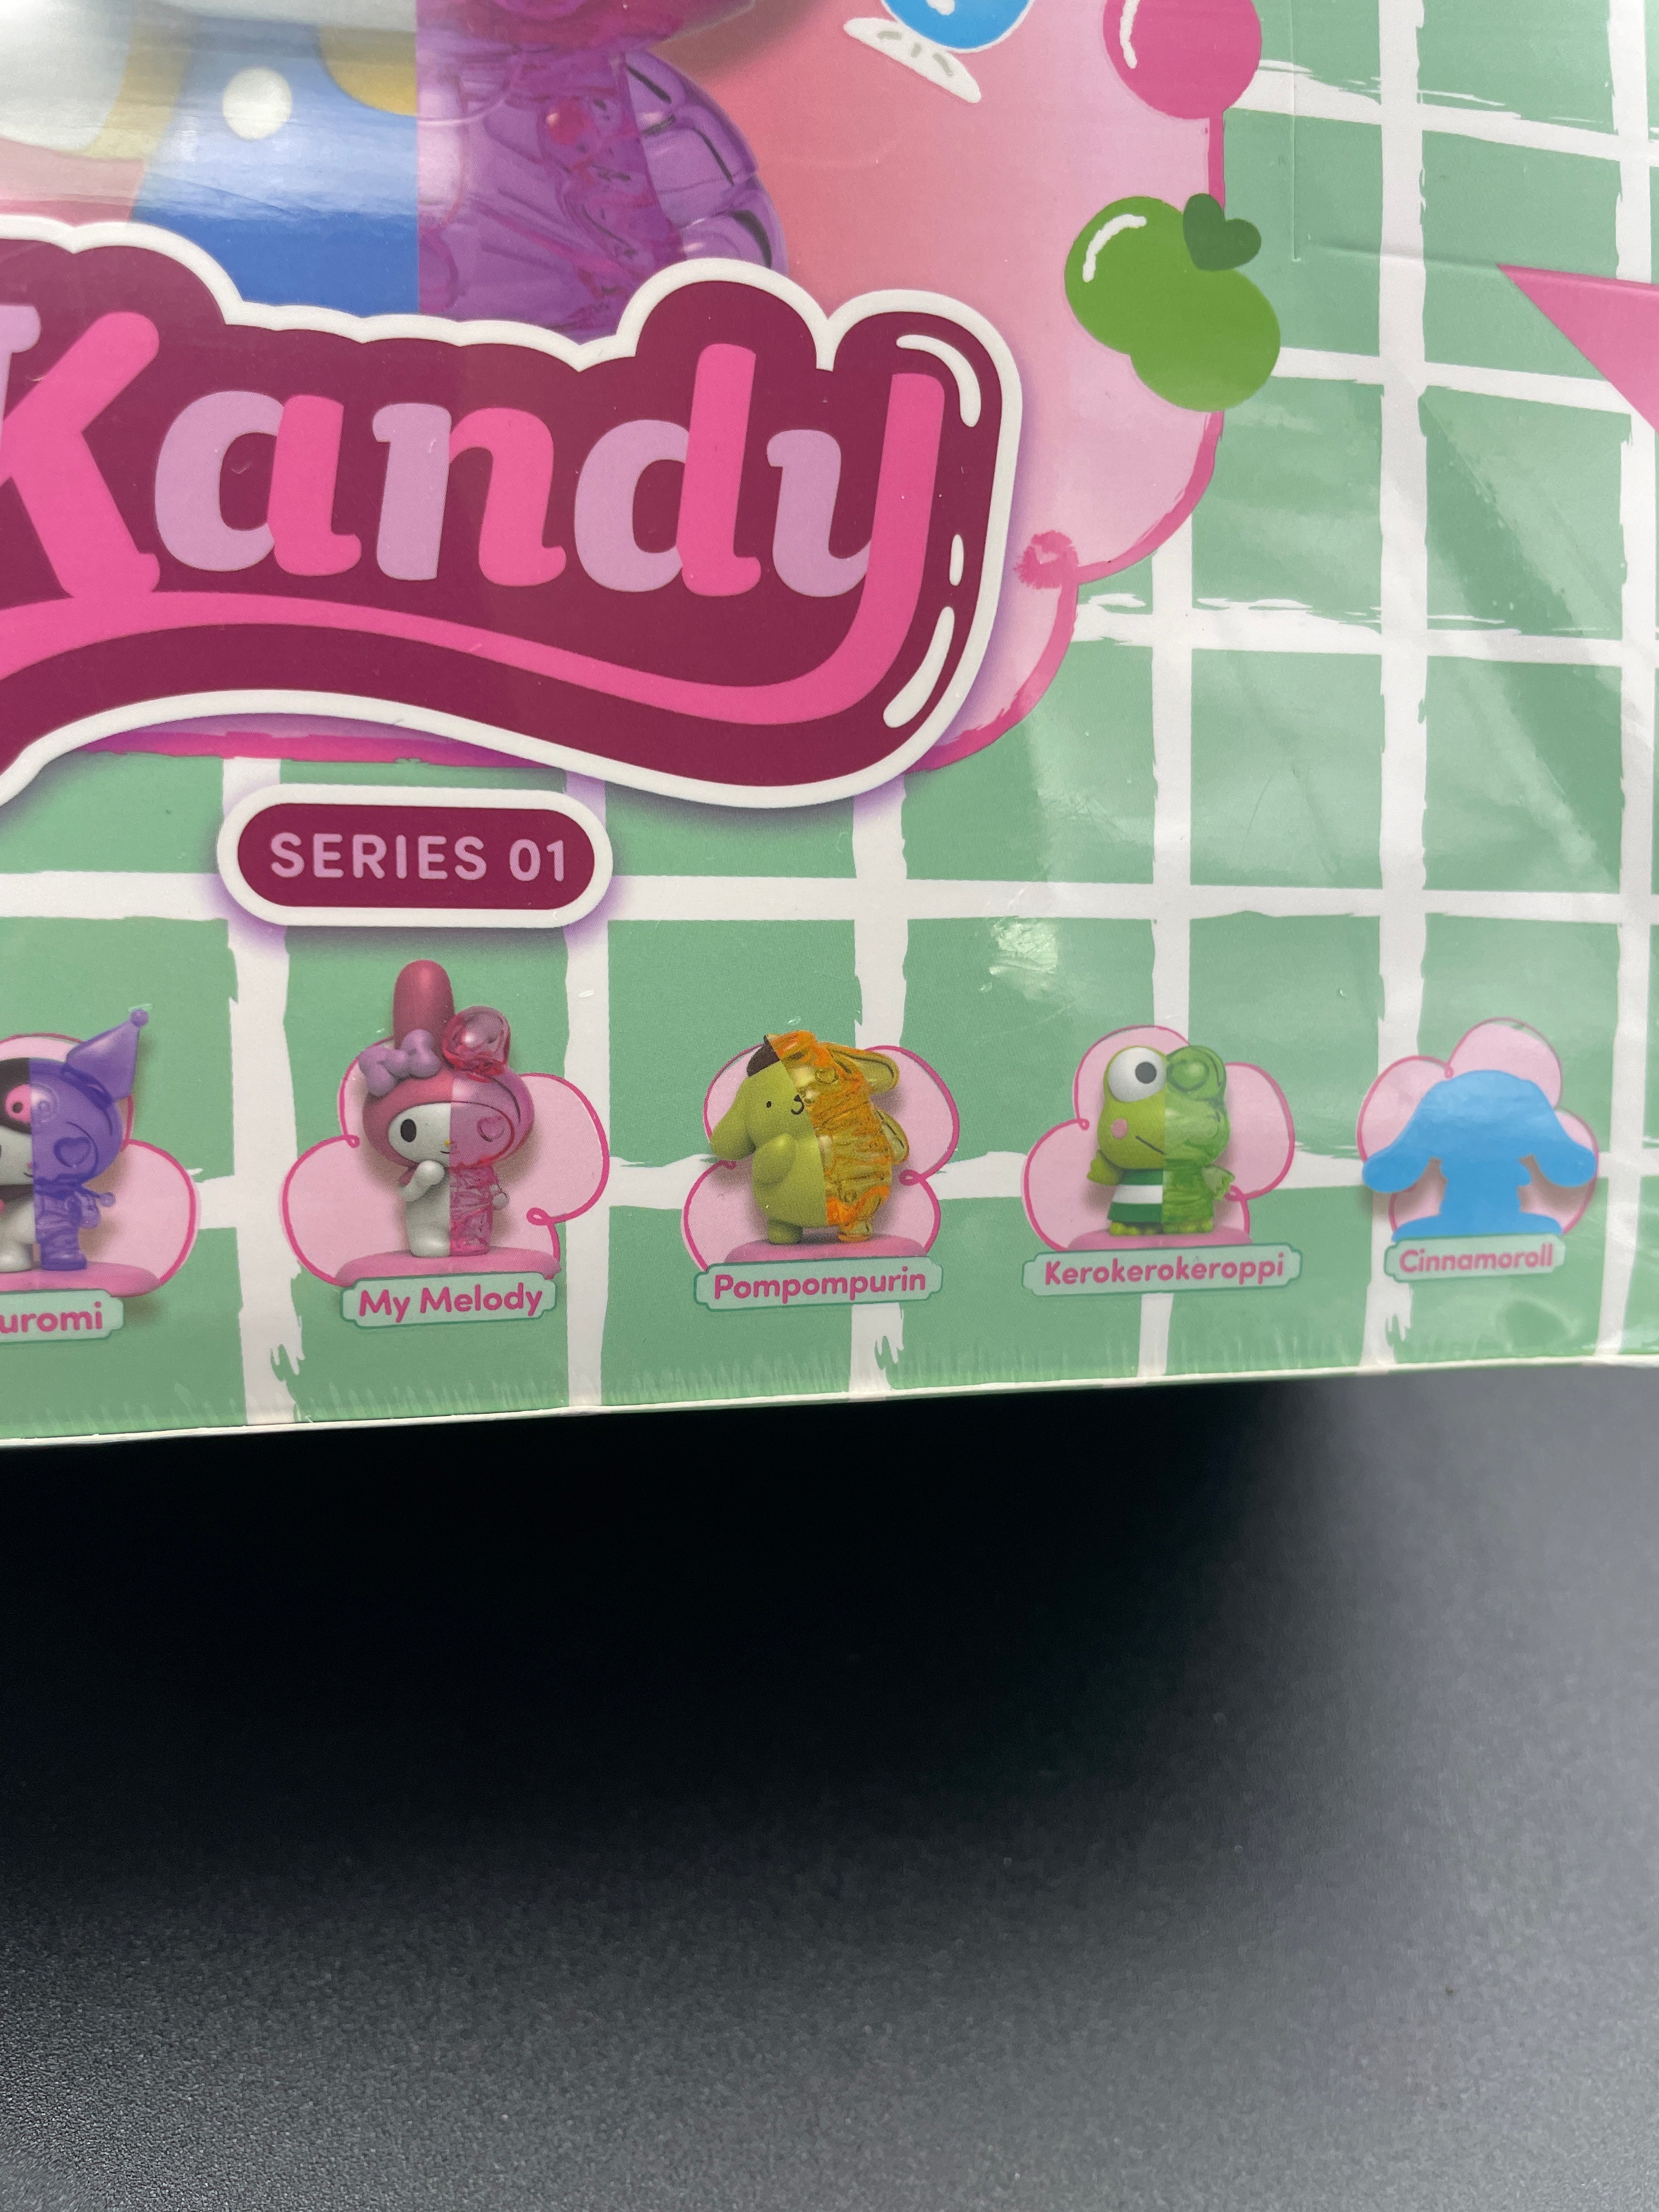 Mighty Jaxx Sanrio Box Of Kandy Jason Freeny Series 1 Unopened Imported